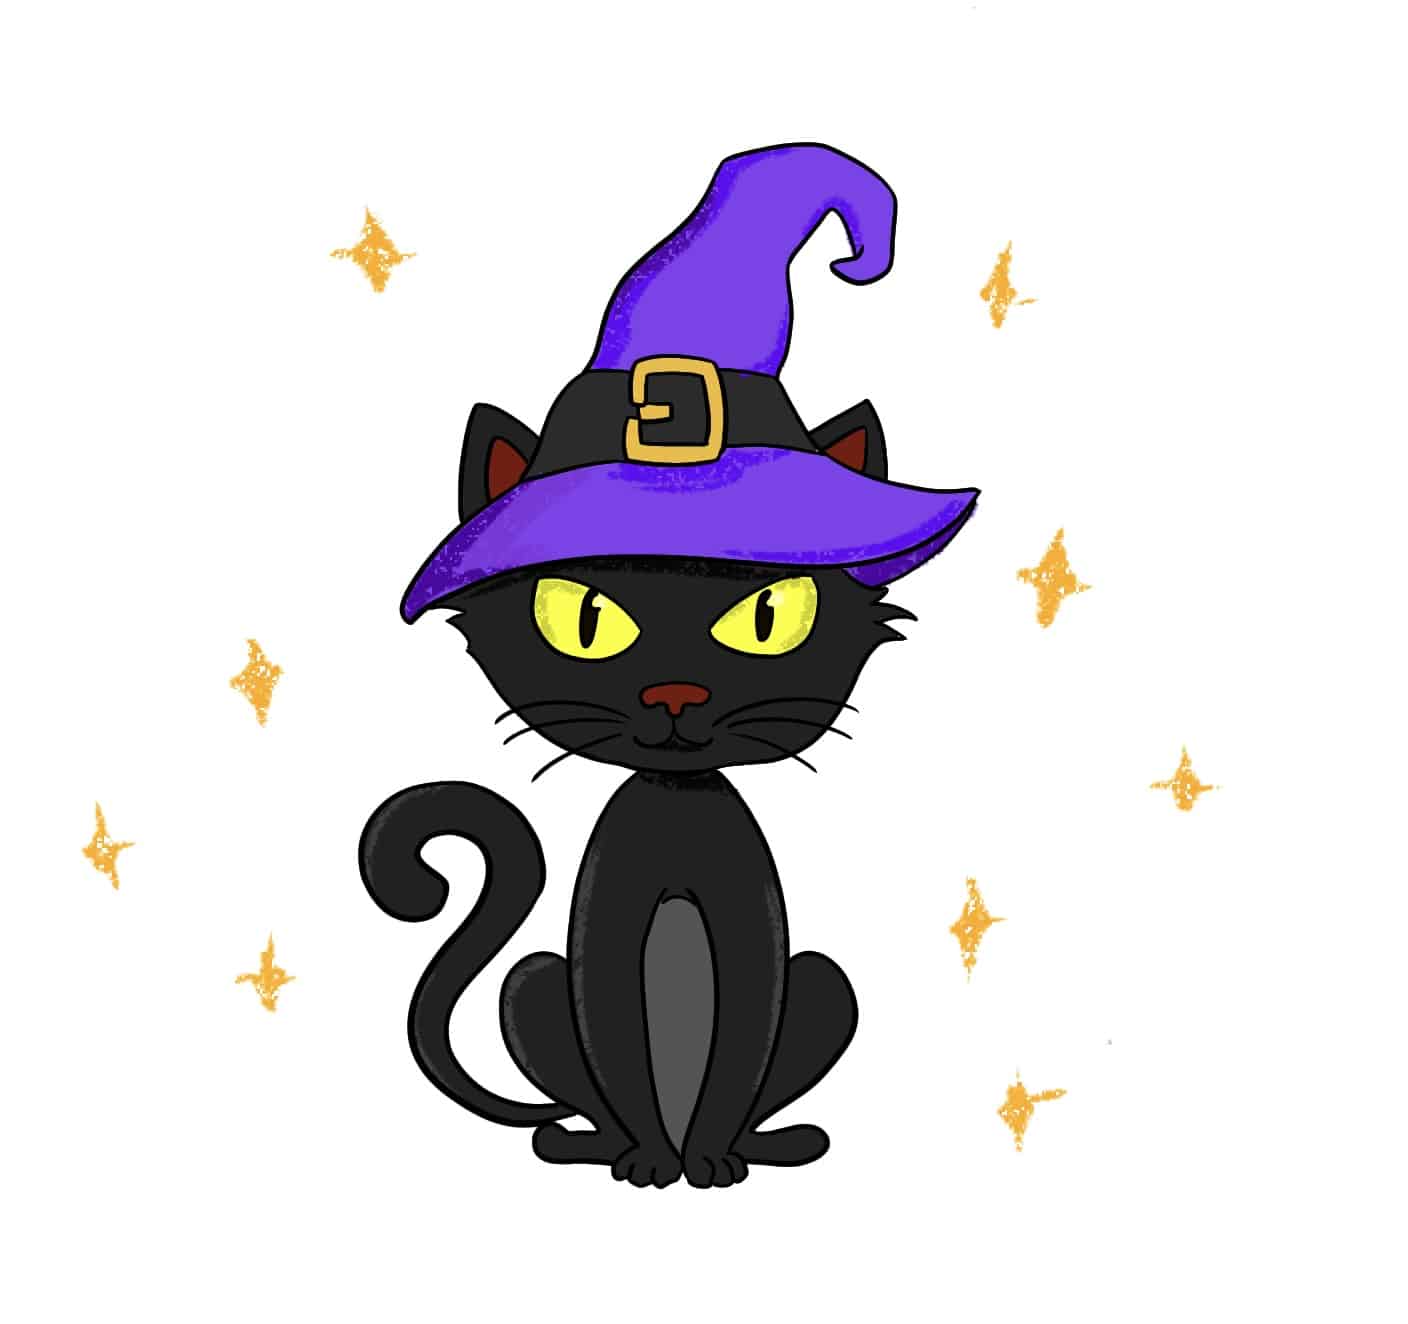 dessingb-Halloween-dessin-dessin-Halloween-chat